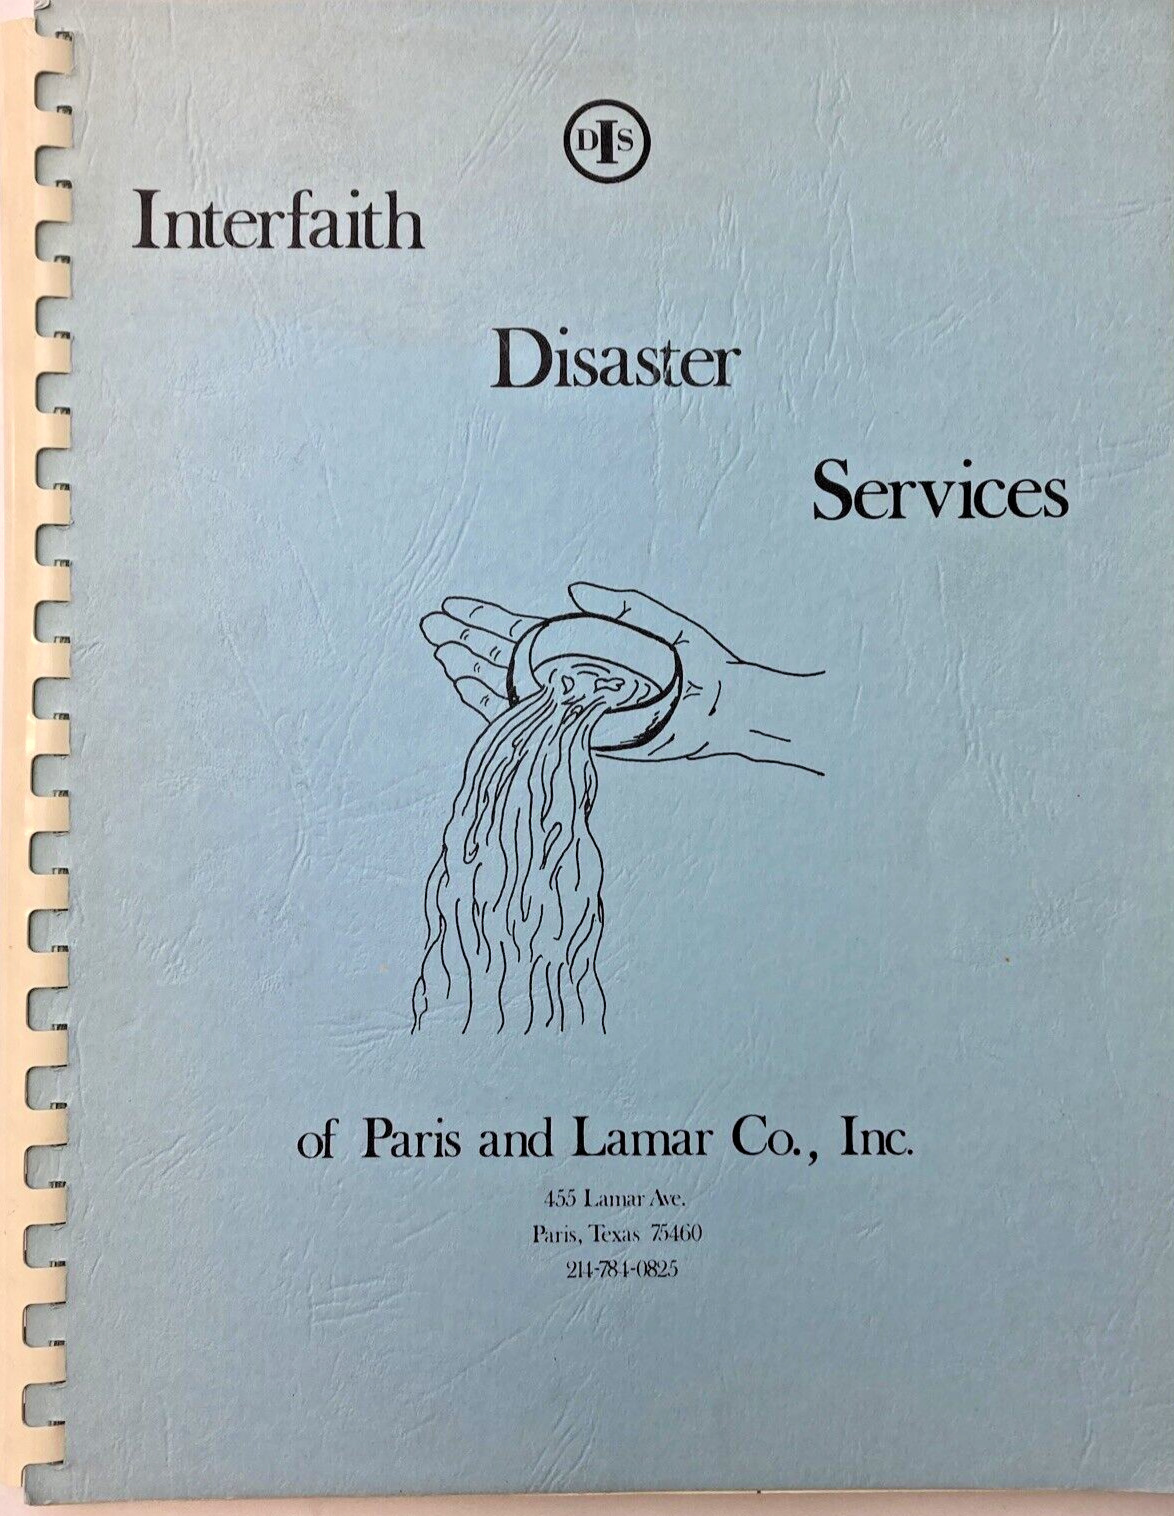 Tornado 1982 Paris Lamar Texas History Disaster Relief Full Summary Interfaith